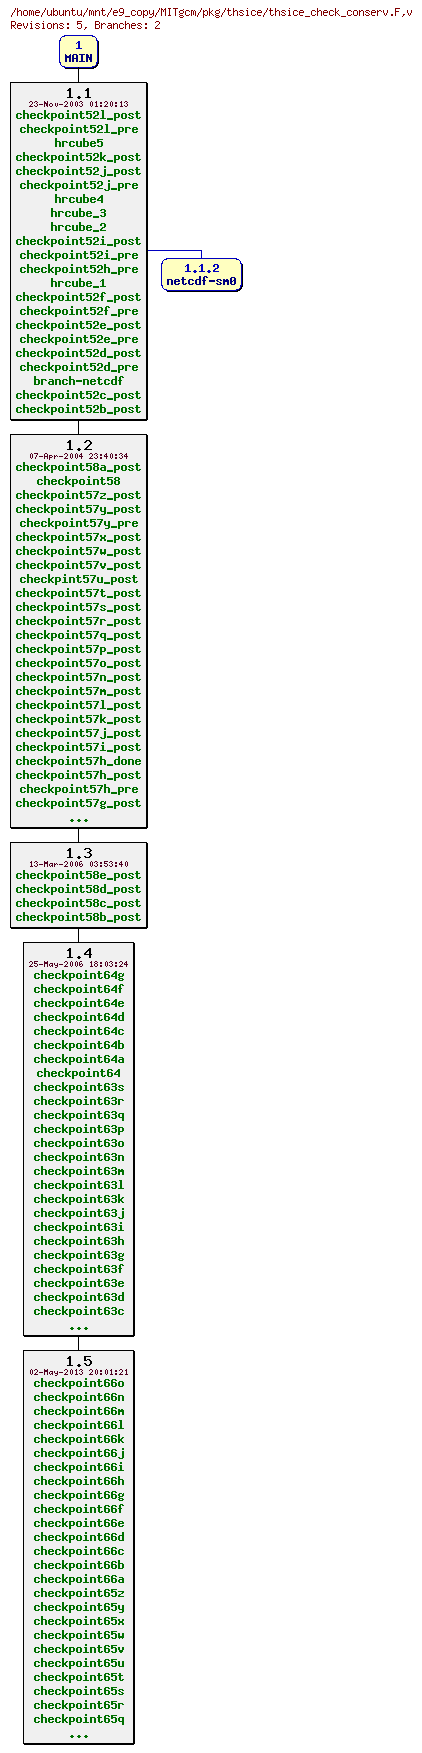 Revisions of MITgcm/pkg/thsice/thsice_check_conserv.F